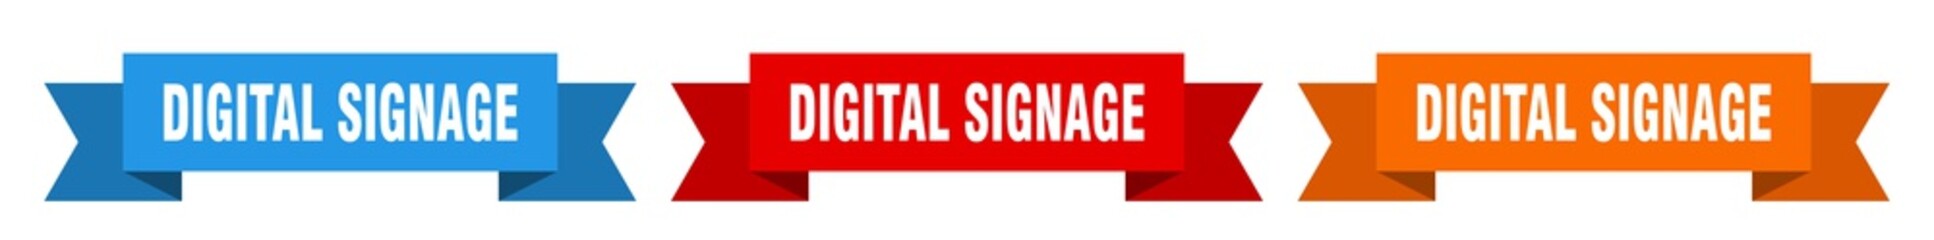 digital signage ribbon. digital signage isolated paper sign. banner